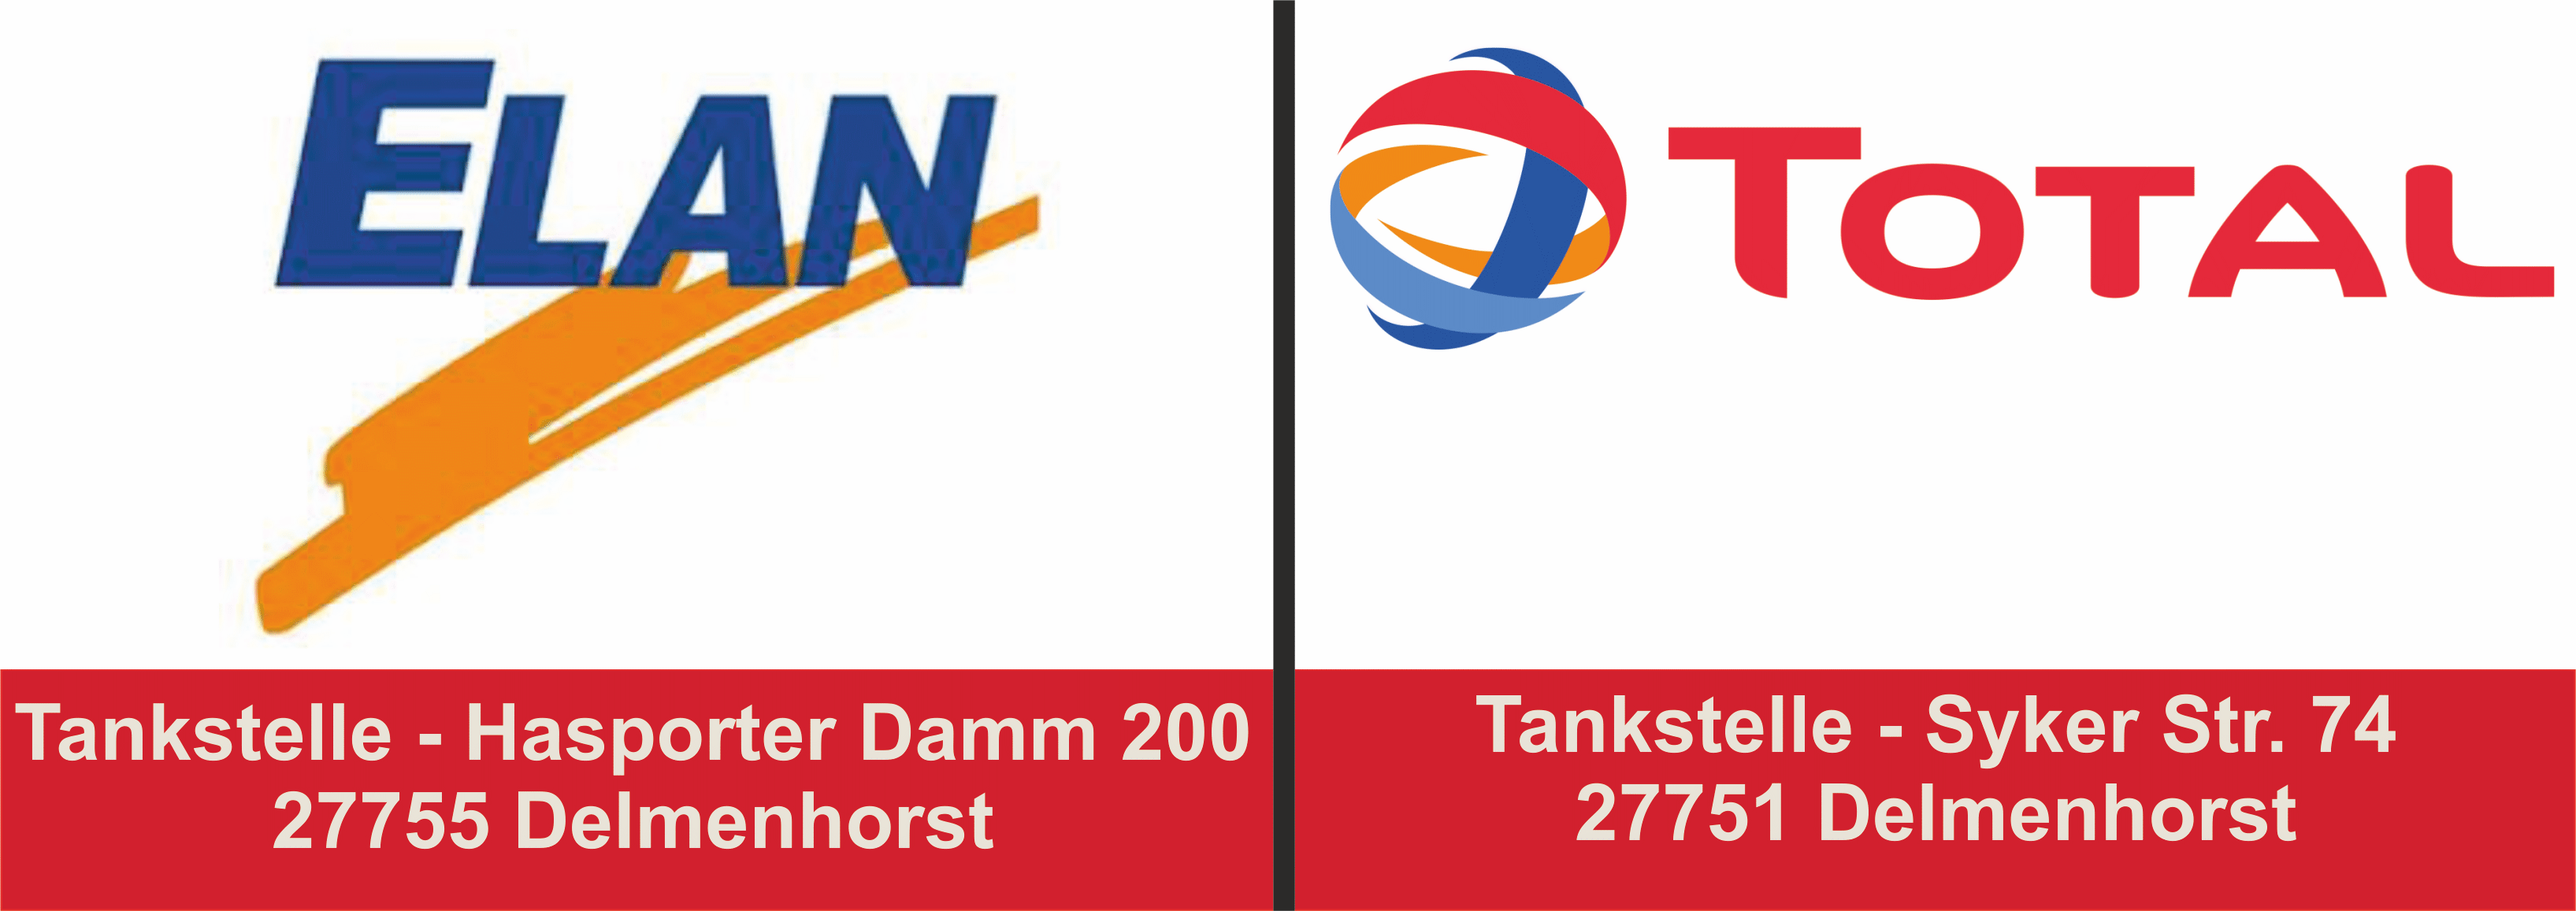 https://www.hsg-delmenhorst.de/wp-content/uploads/2022/01/Tankstellen_Koenig.png